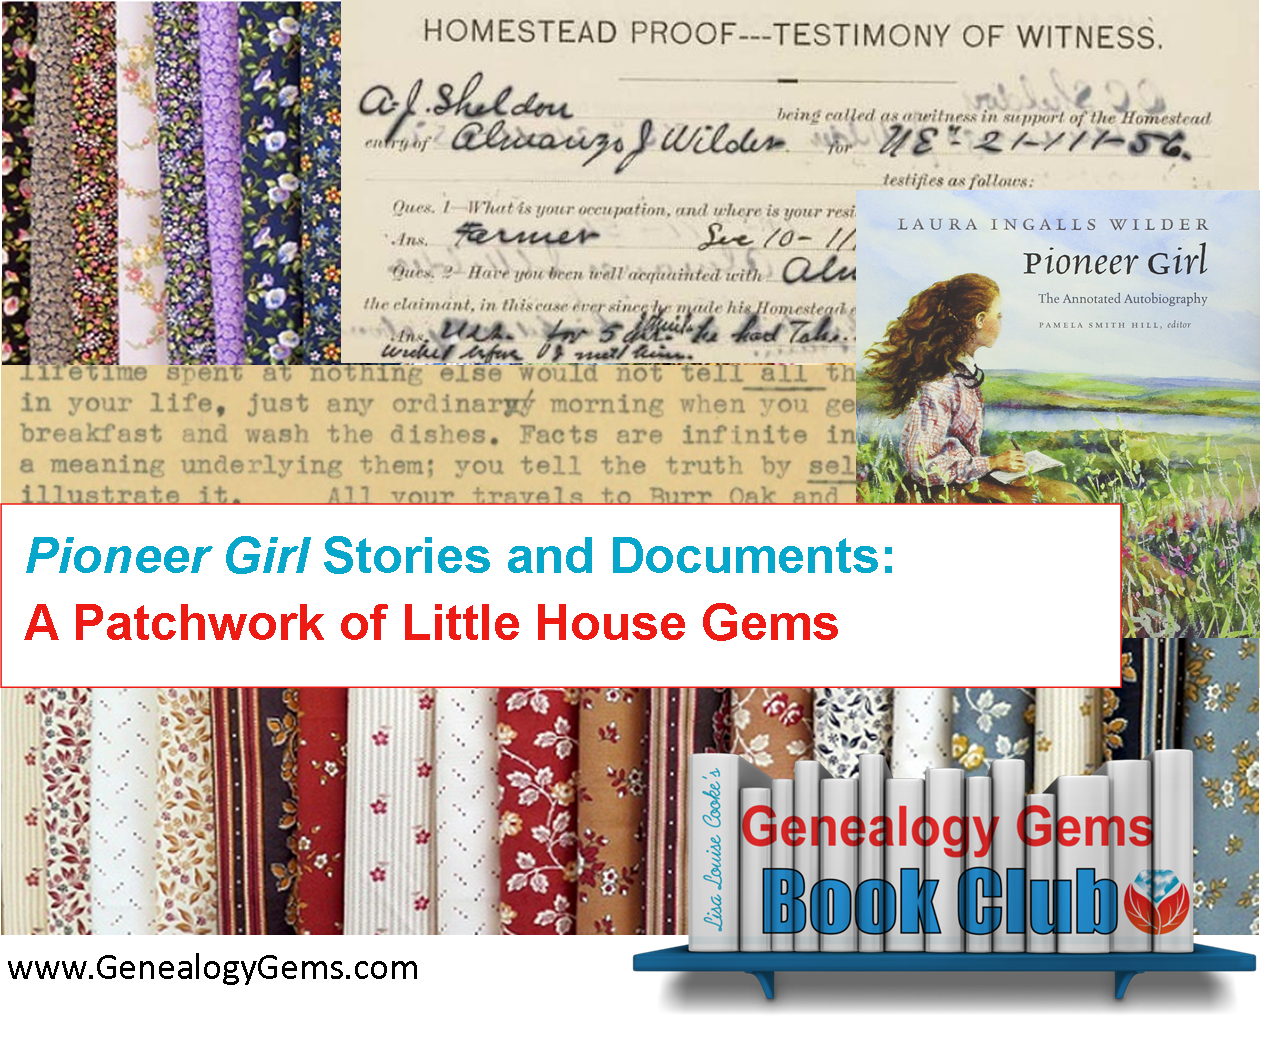 Laura Ingalls Wilder Stories: A Patchwork of Little House Gems